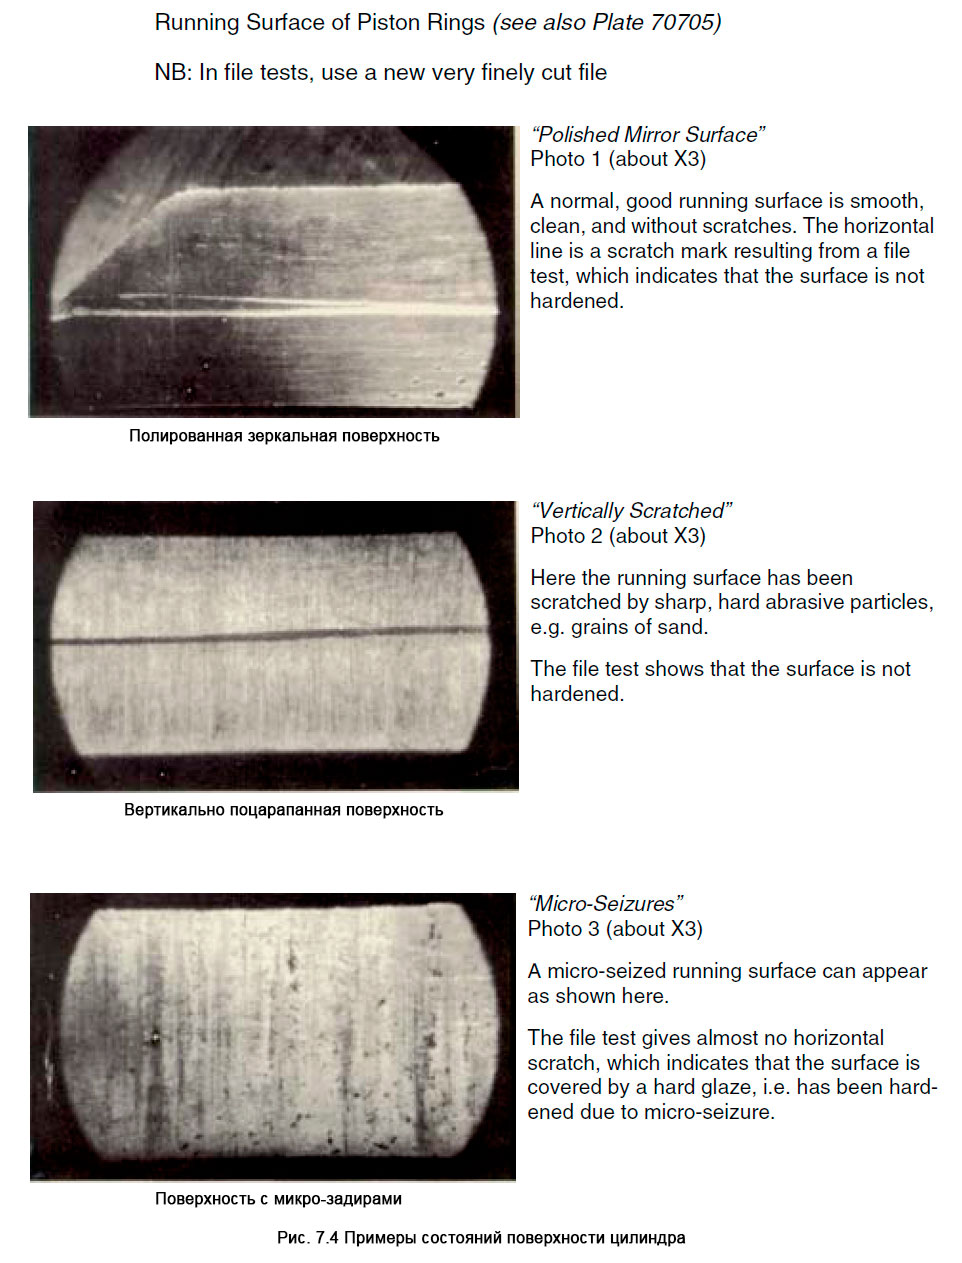 Примеры состояний поверхности цилиндра - Inspection through Scavenge Ports. Pictures